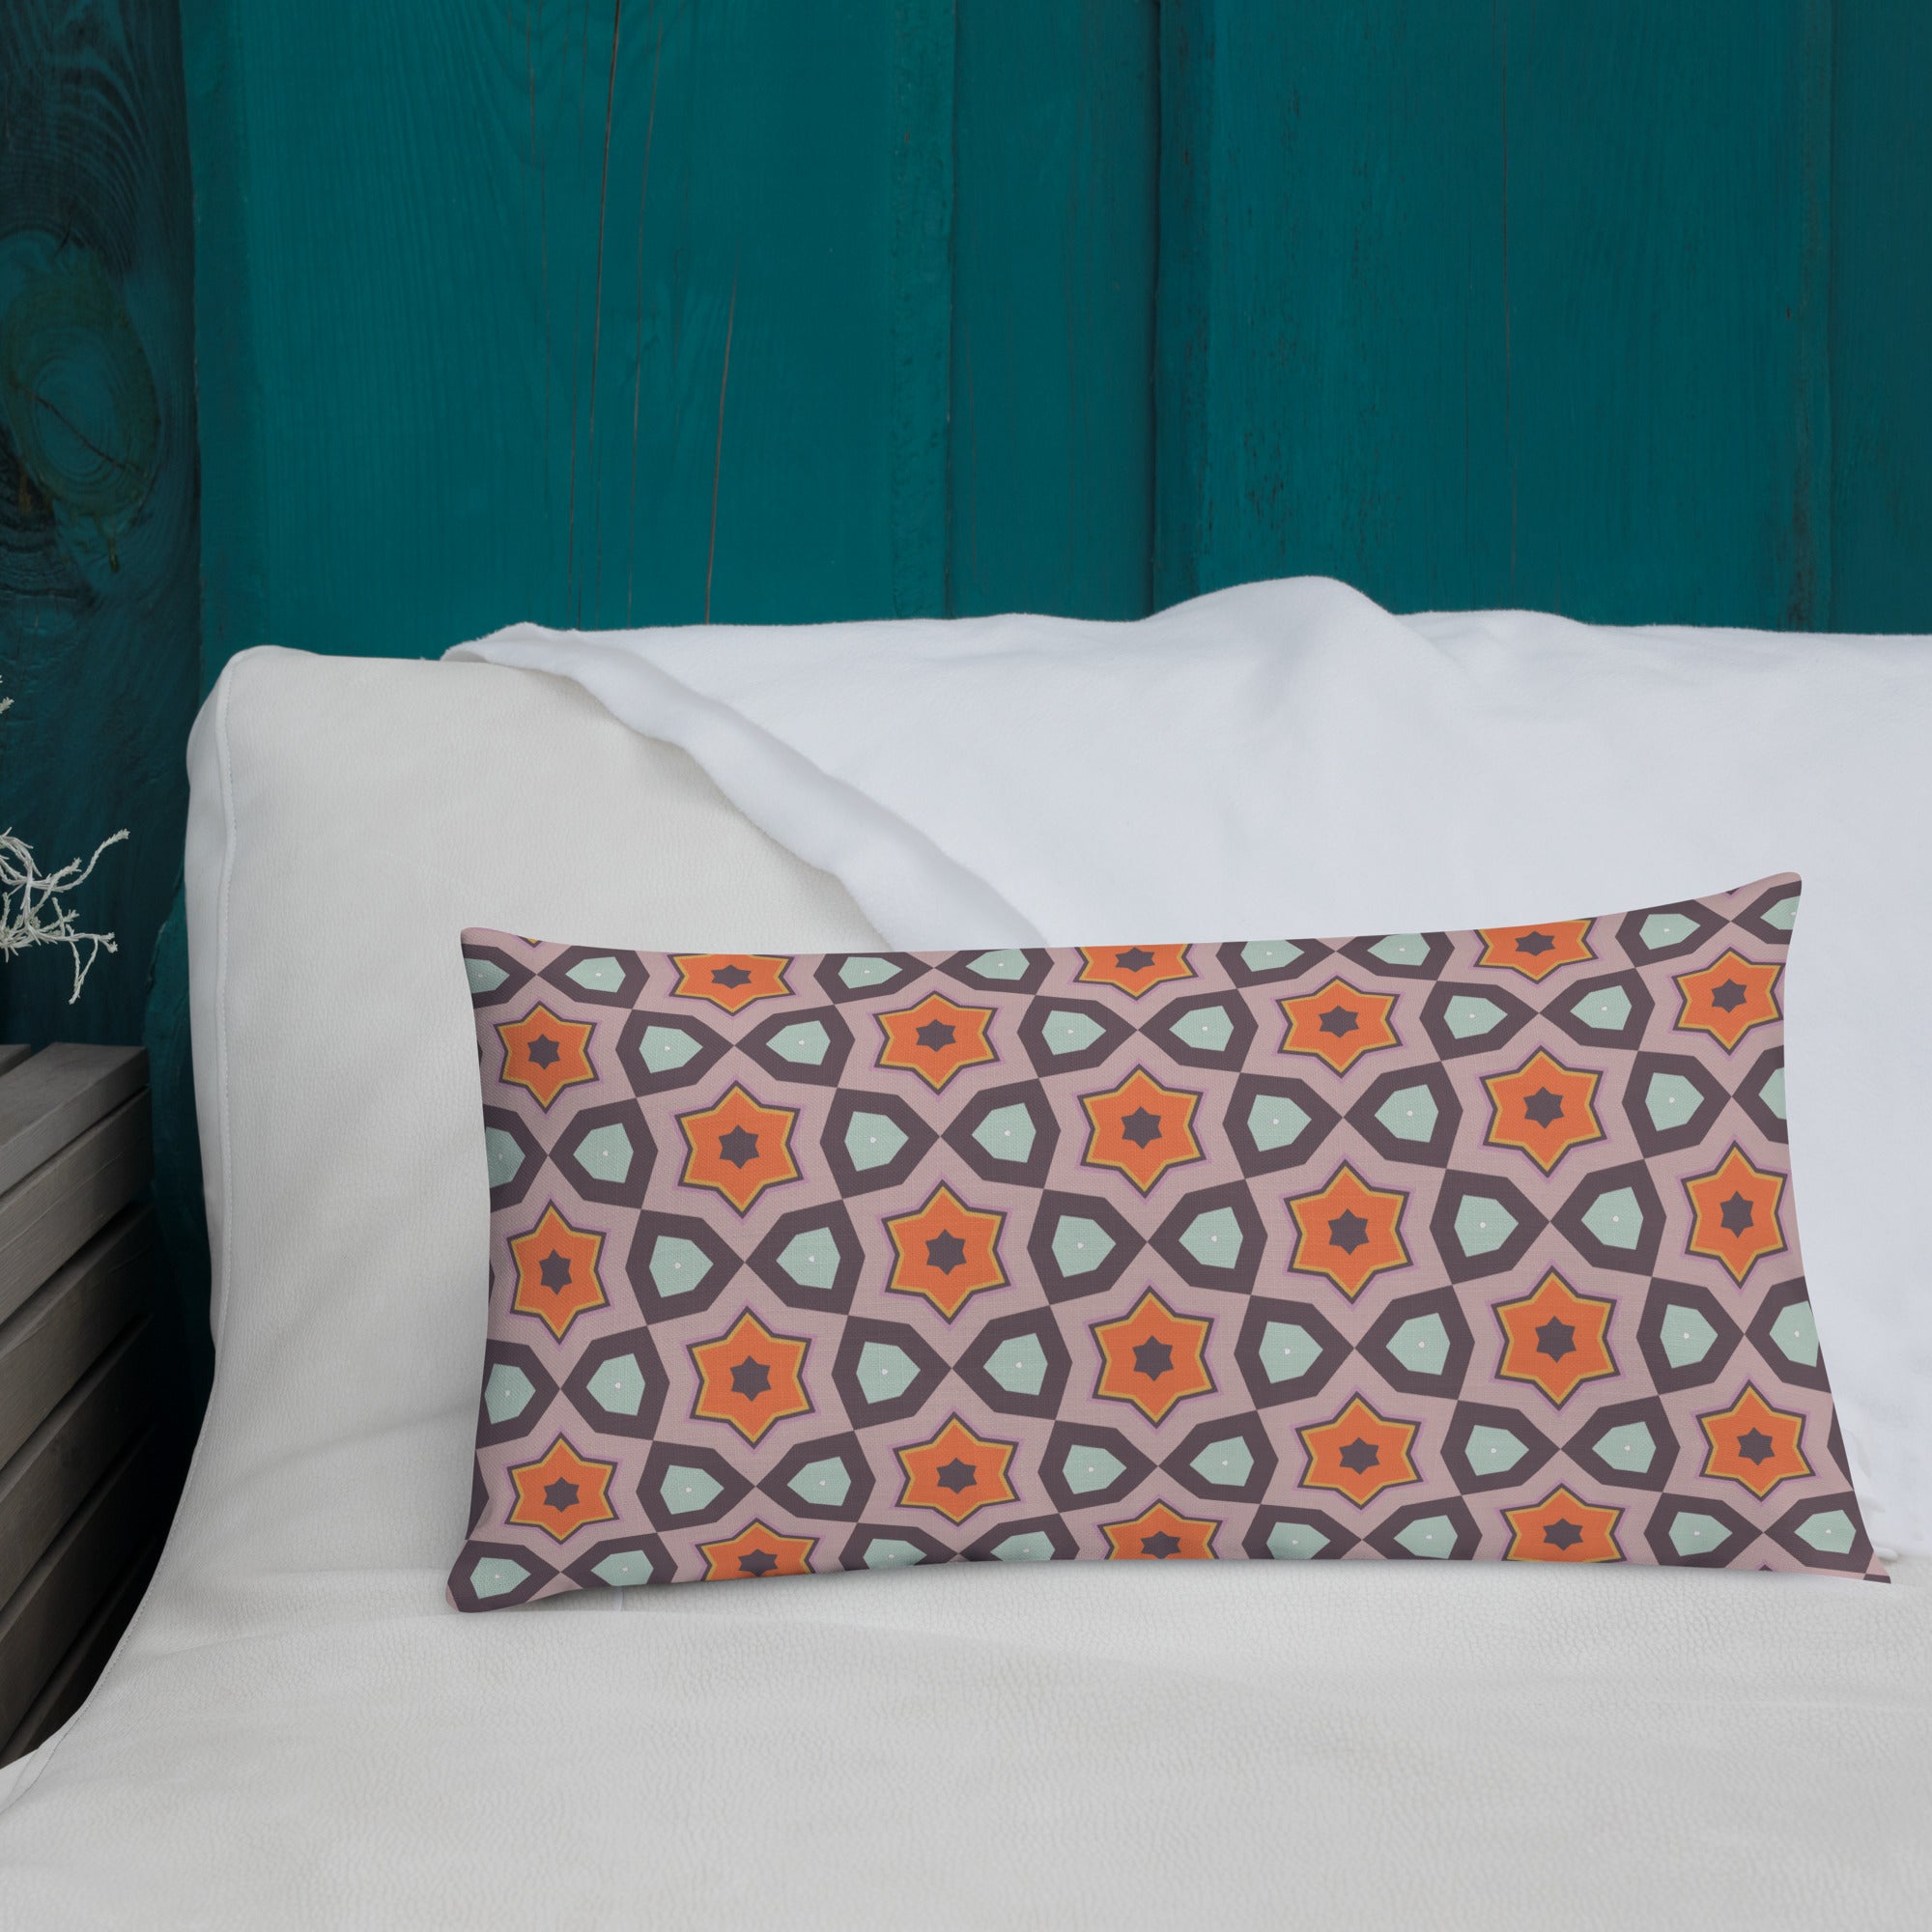 Elegant Monochrome Magic Premium Accent Pillow with stylish design